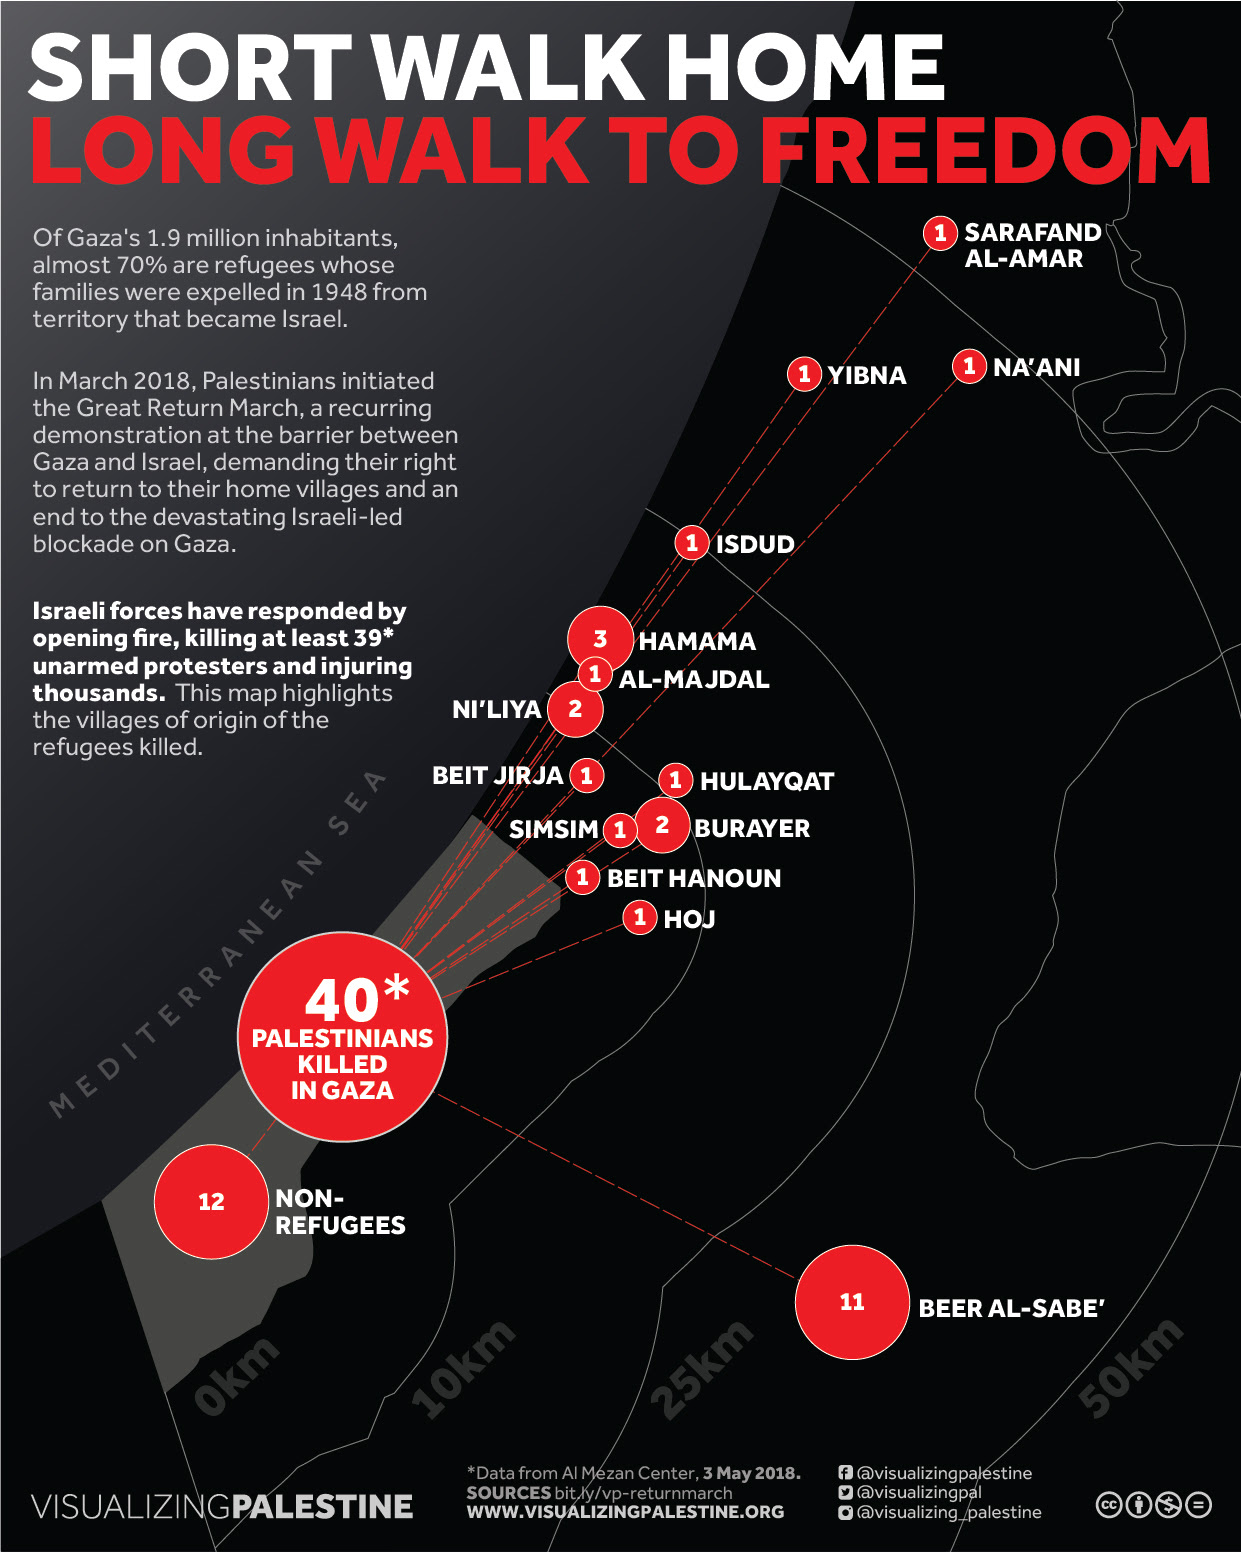 vp-gaza-long-walk-to-freedom.jpg